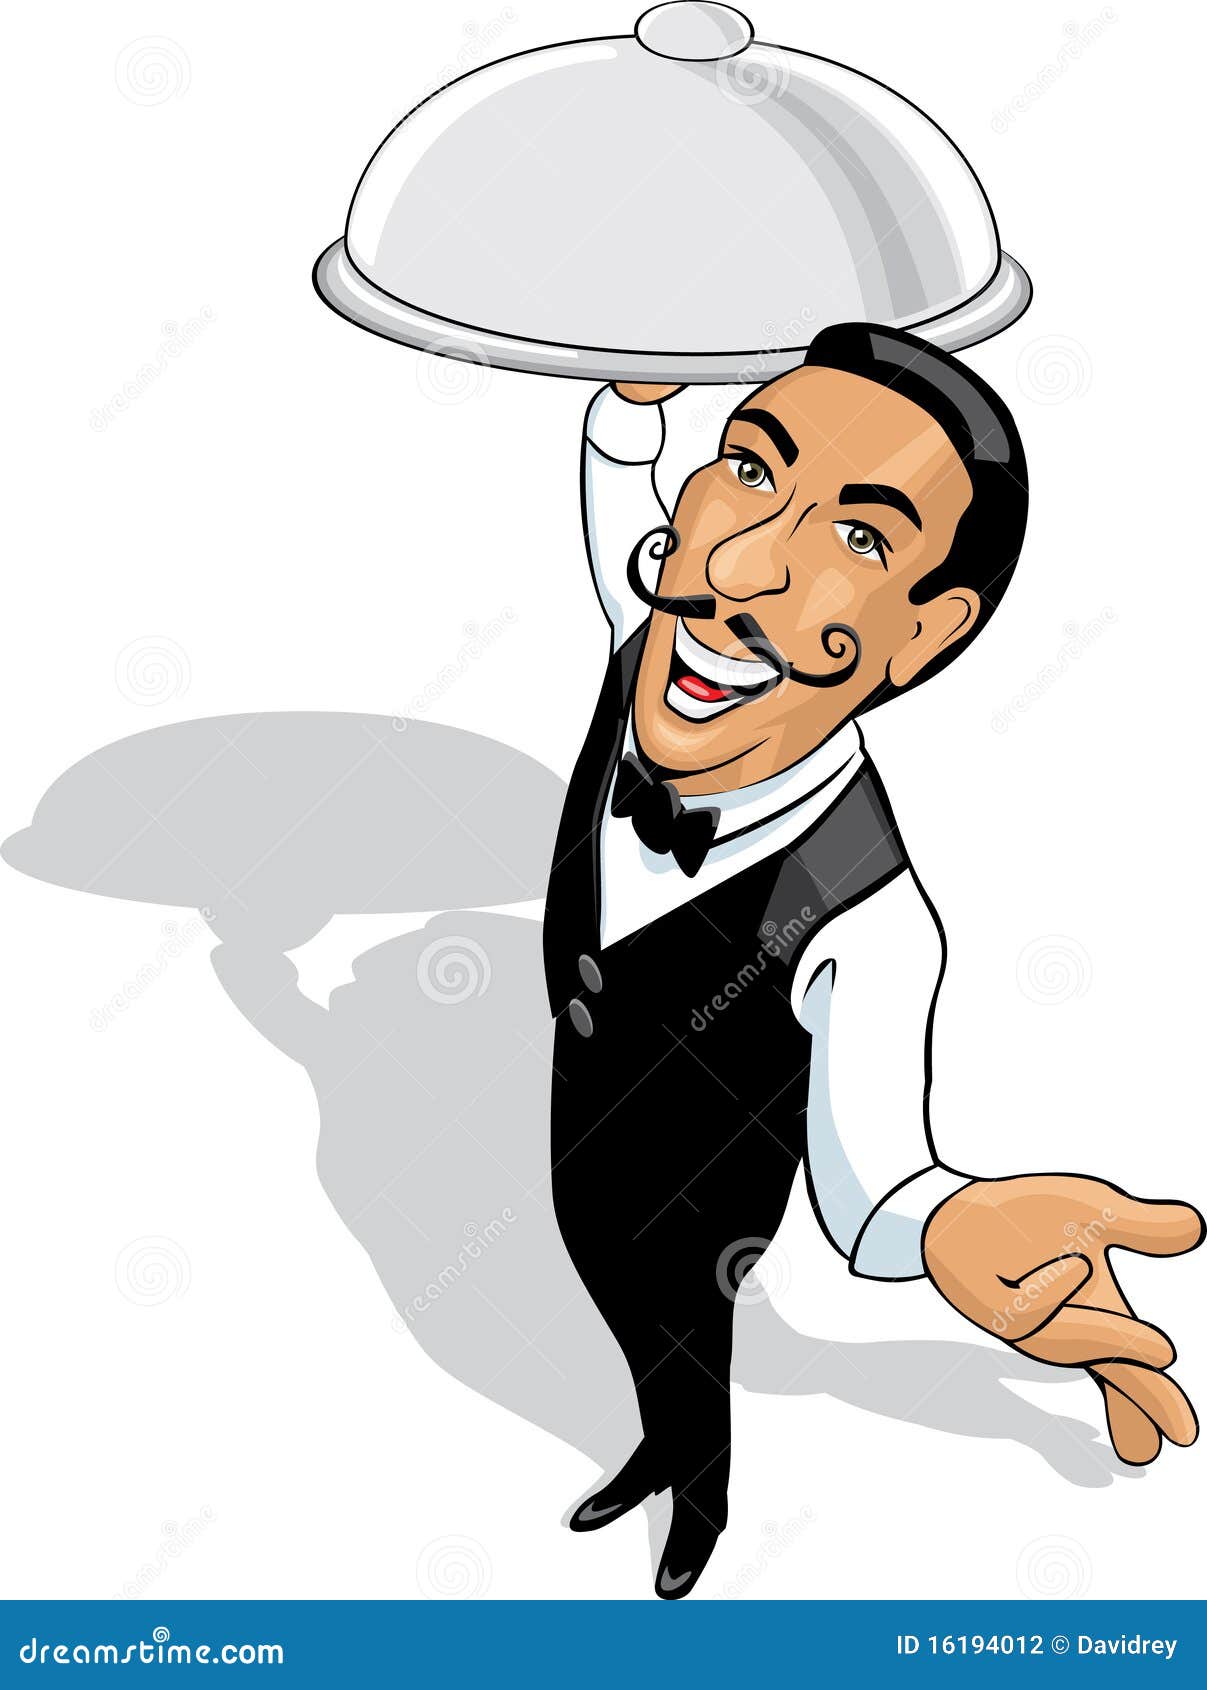 waiter cartoon